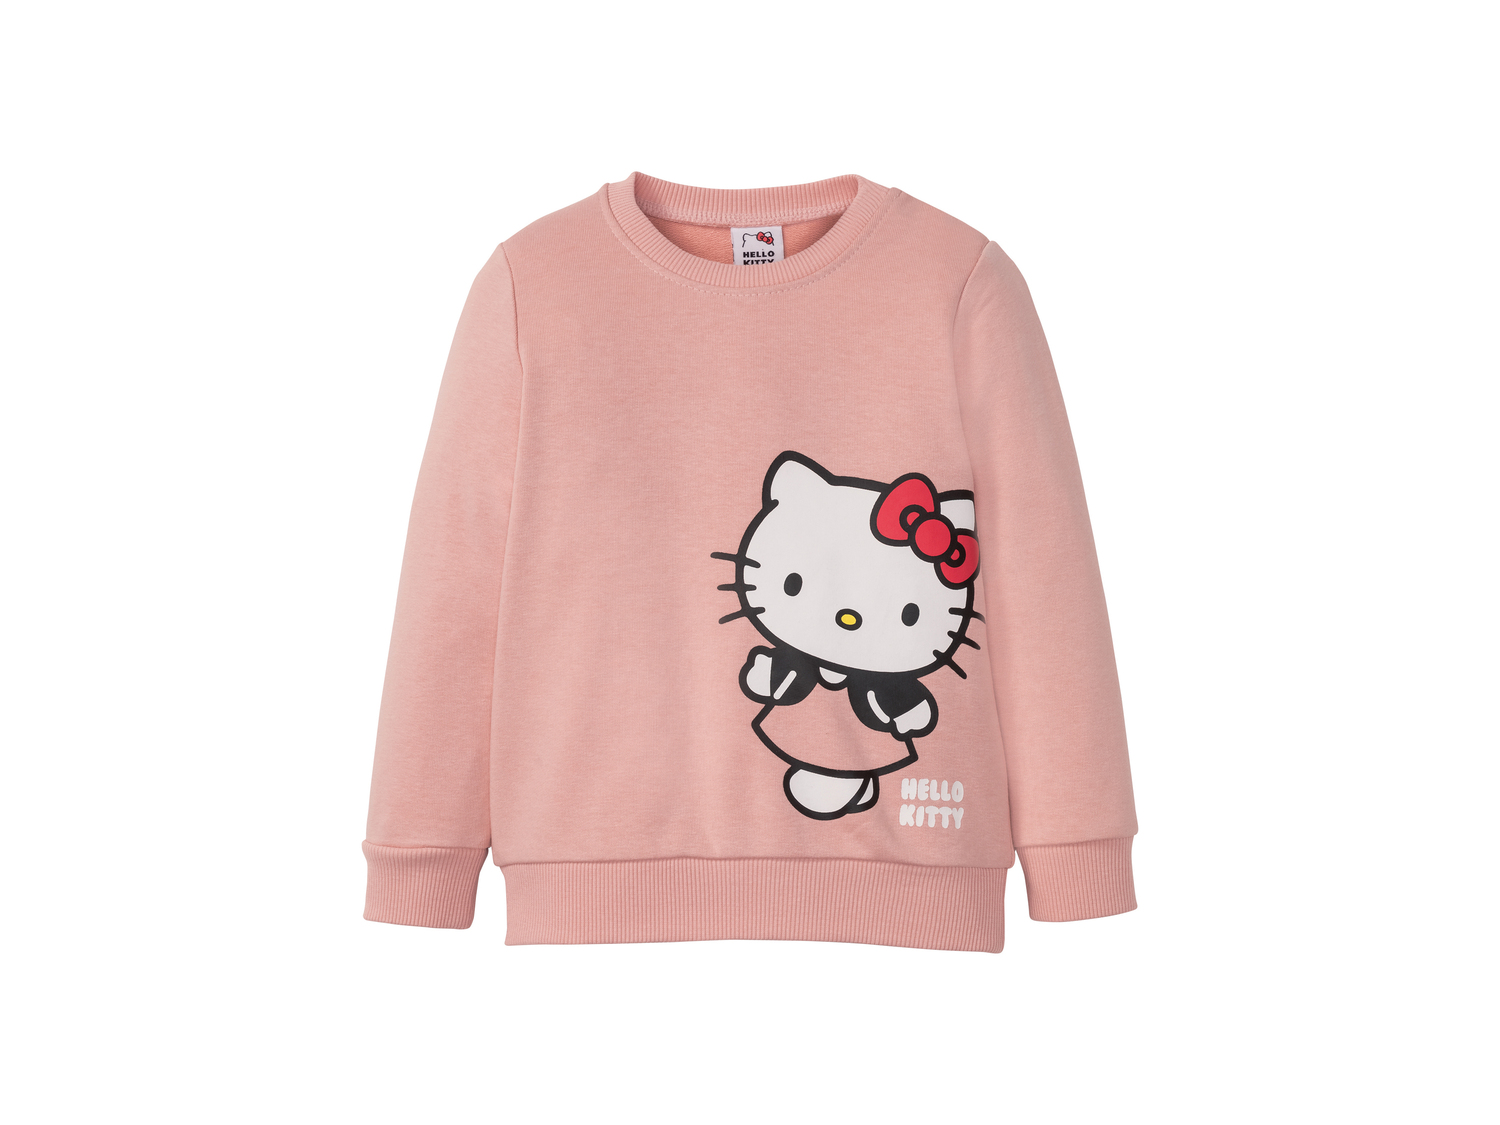 Felpa da bambina LOL, Hello Kitty, Bugs Bunny Oeko-tex, prezzo 6.99 € 
Misure: ...